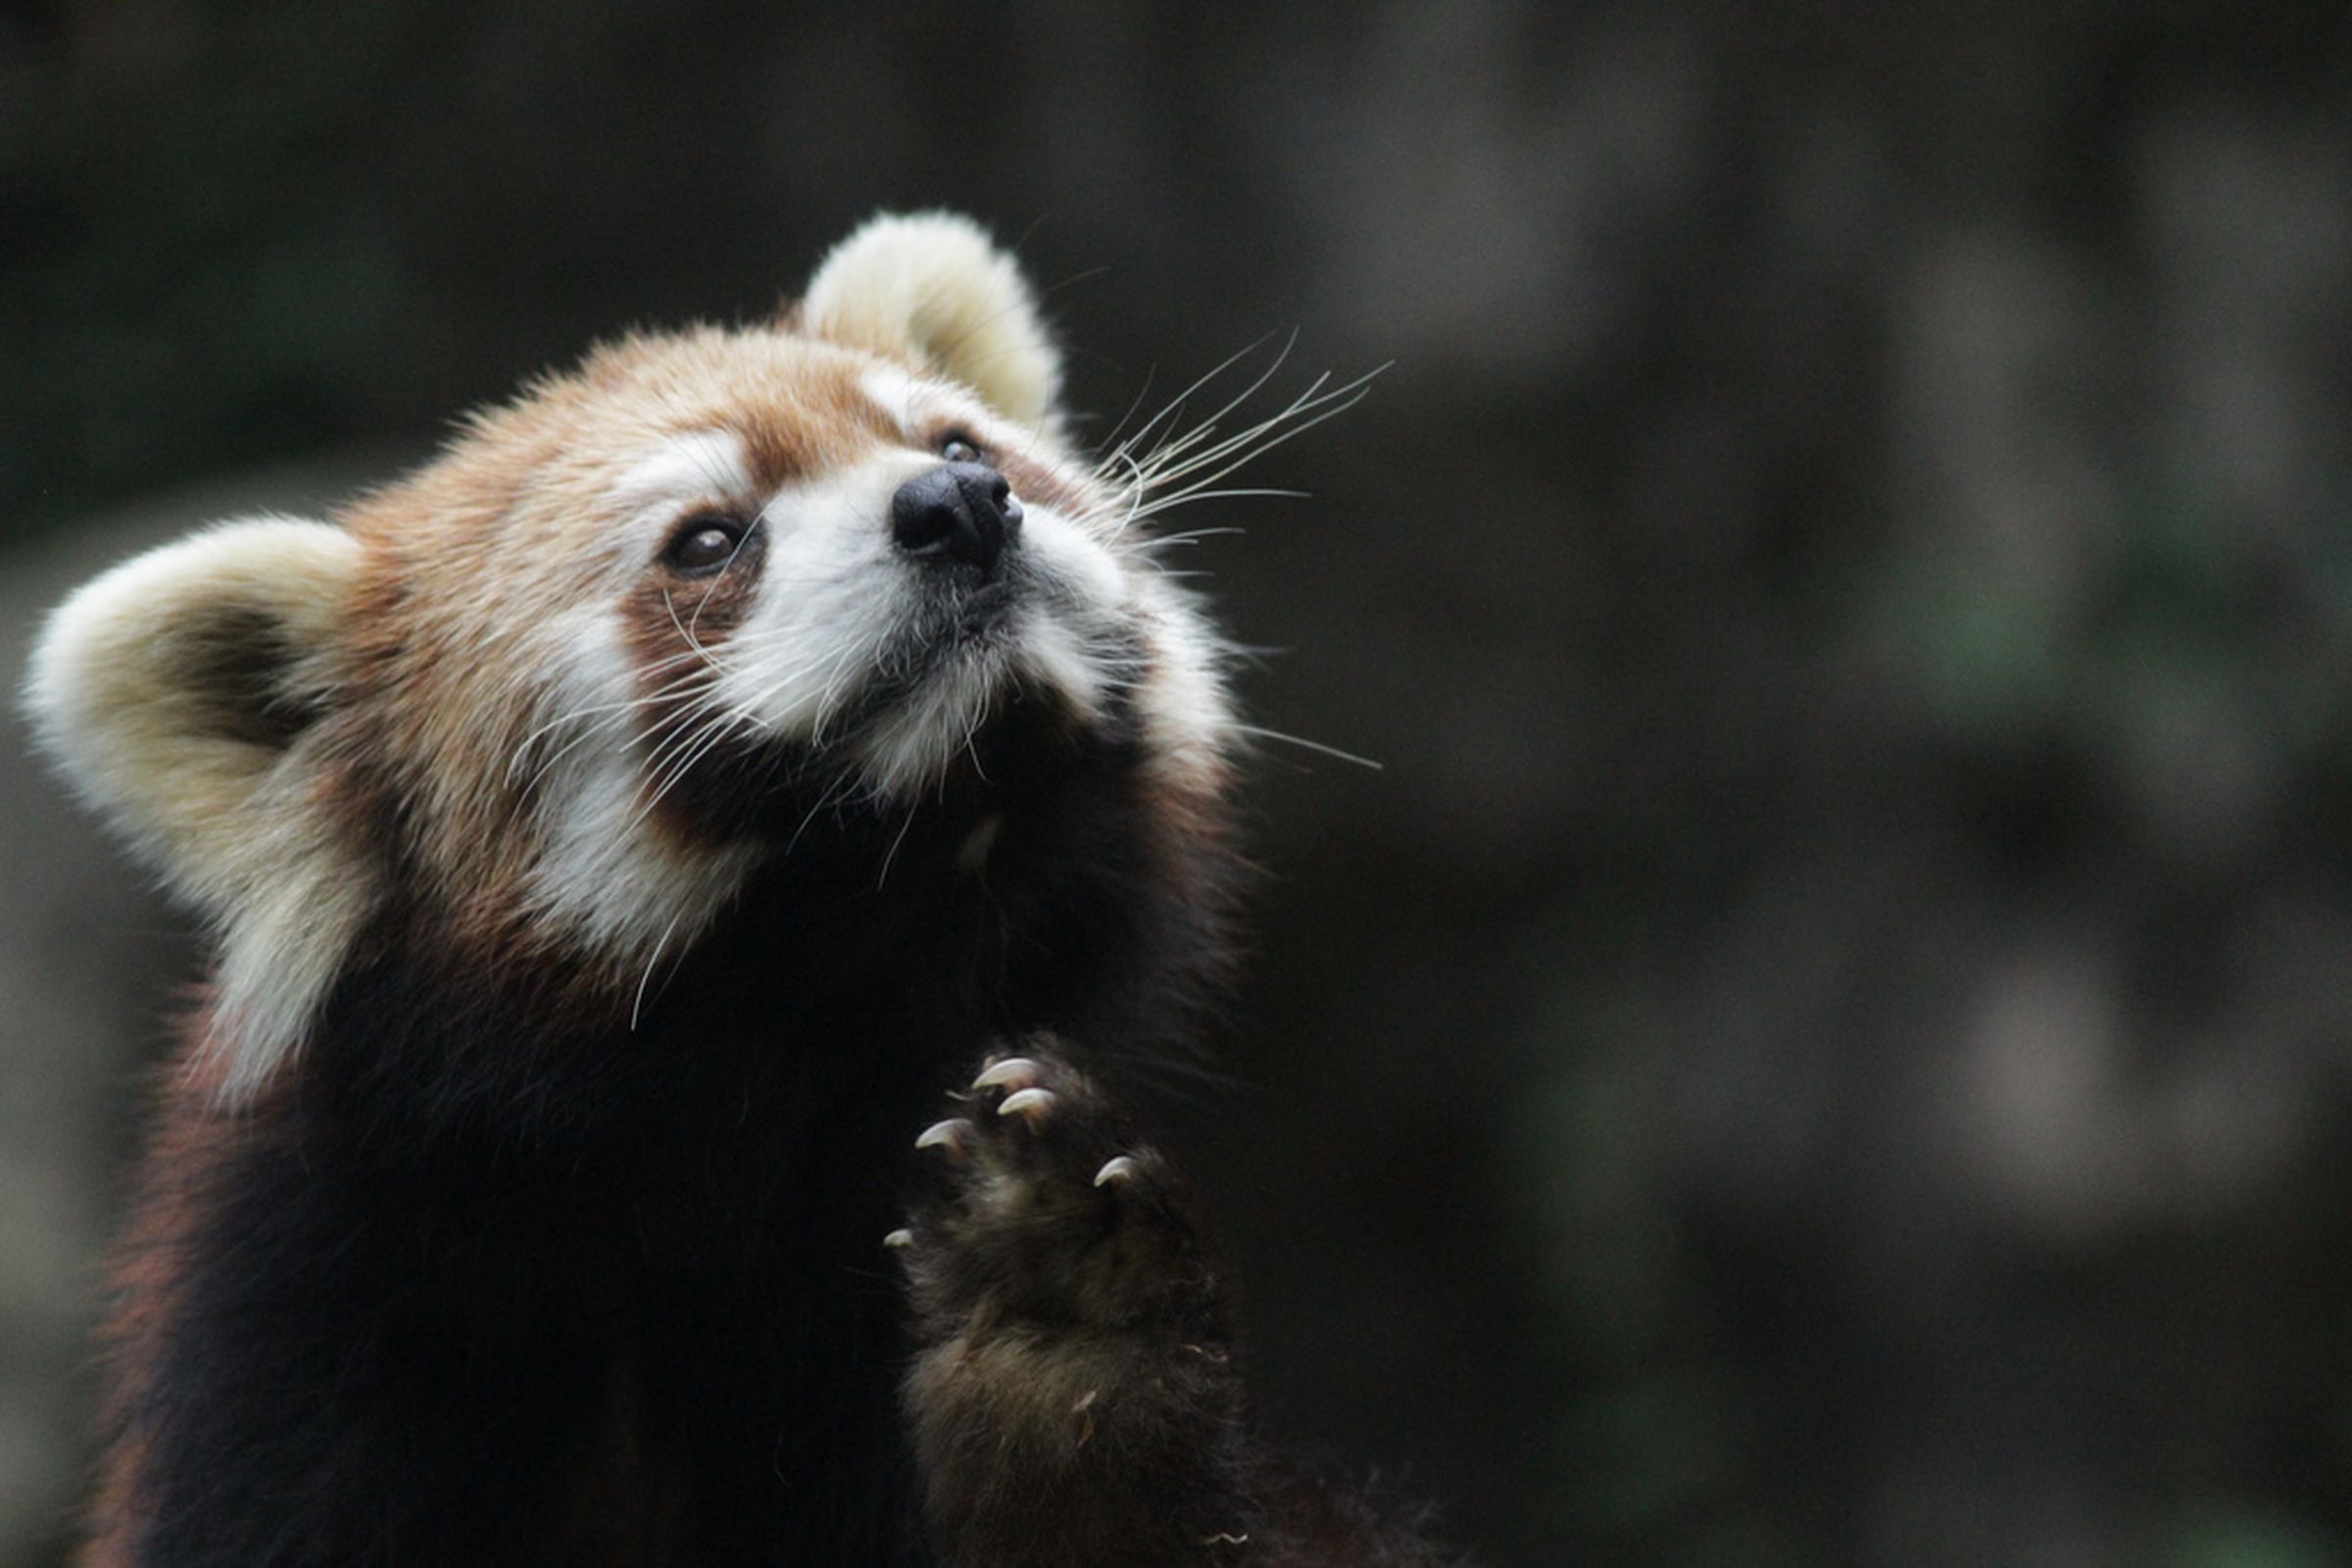 Firefox Red Panda (Flickr)